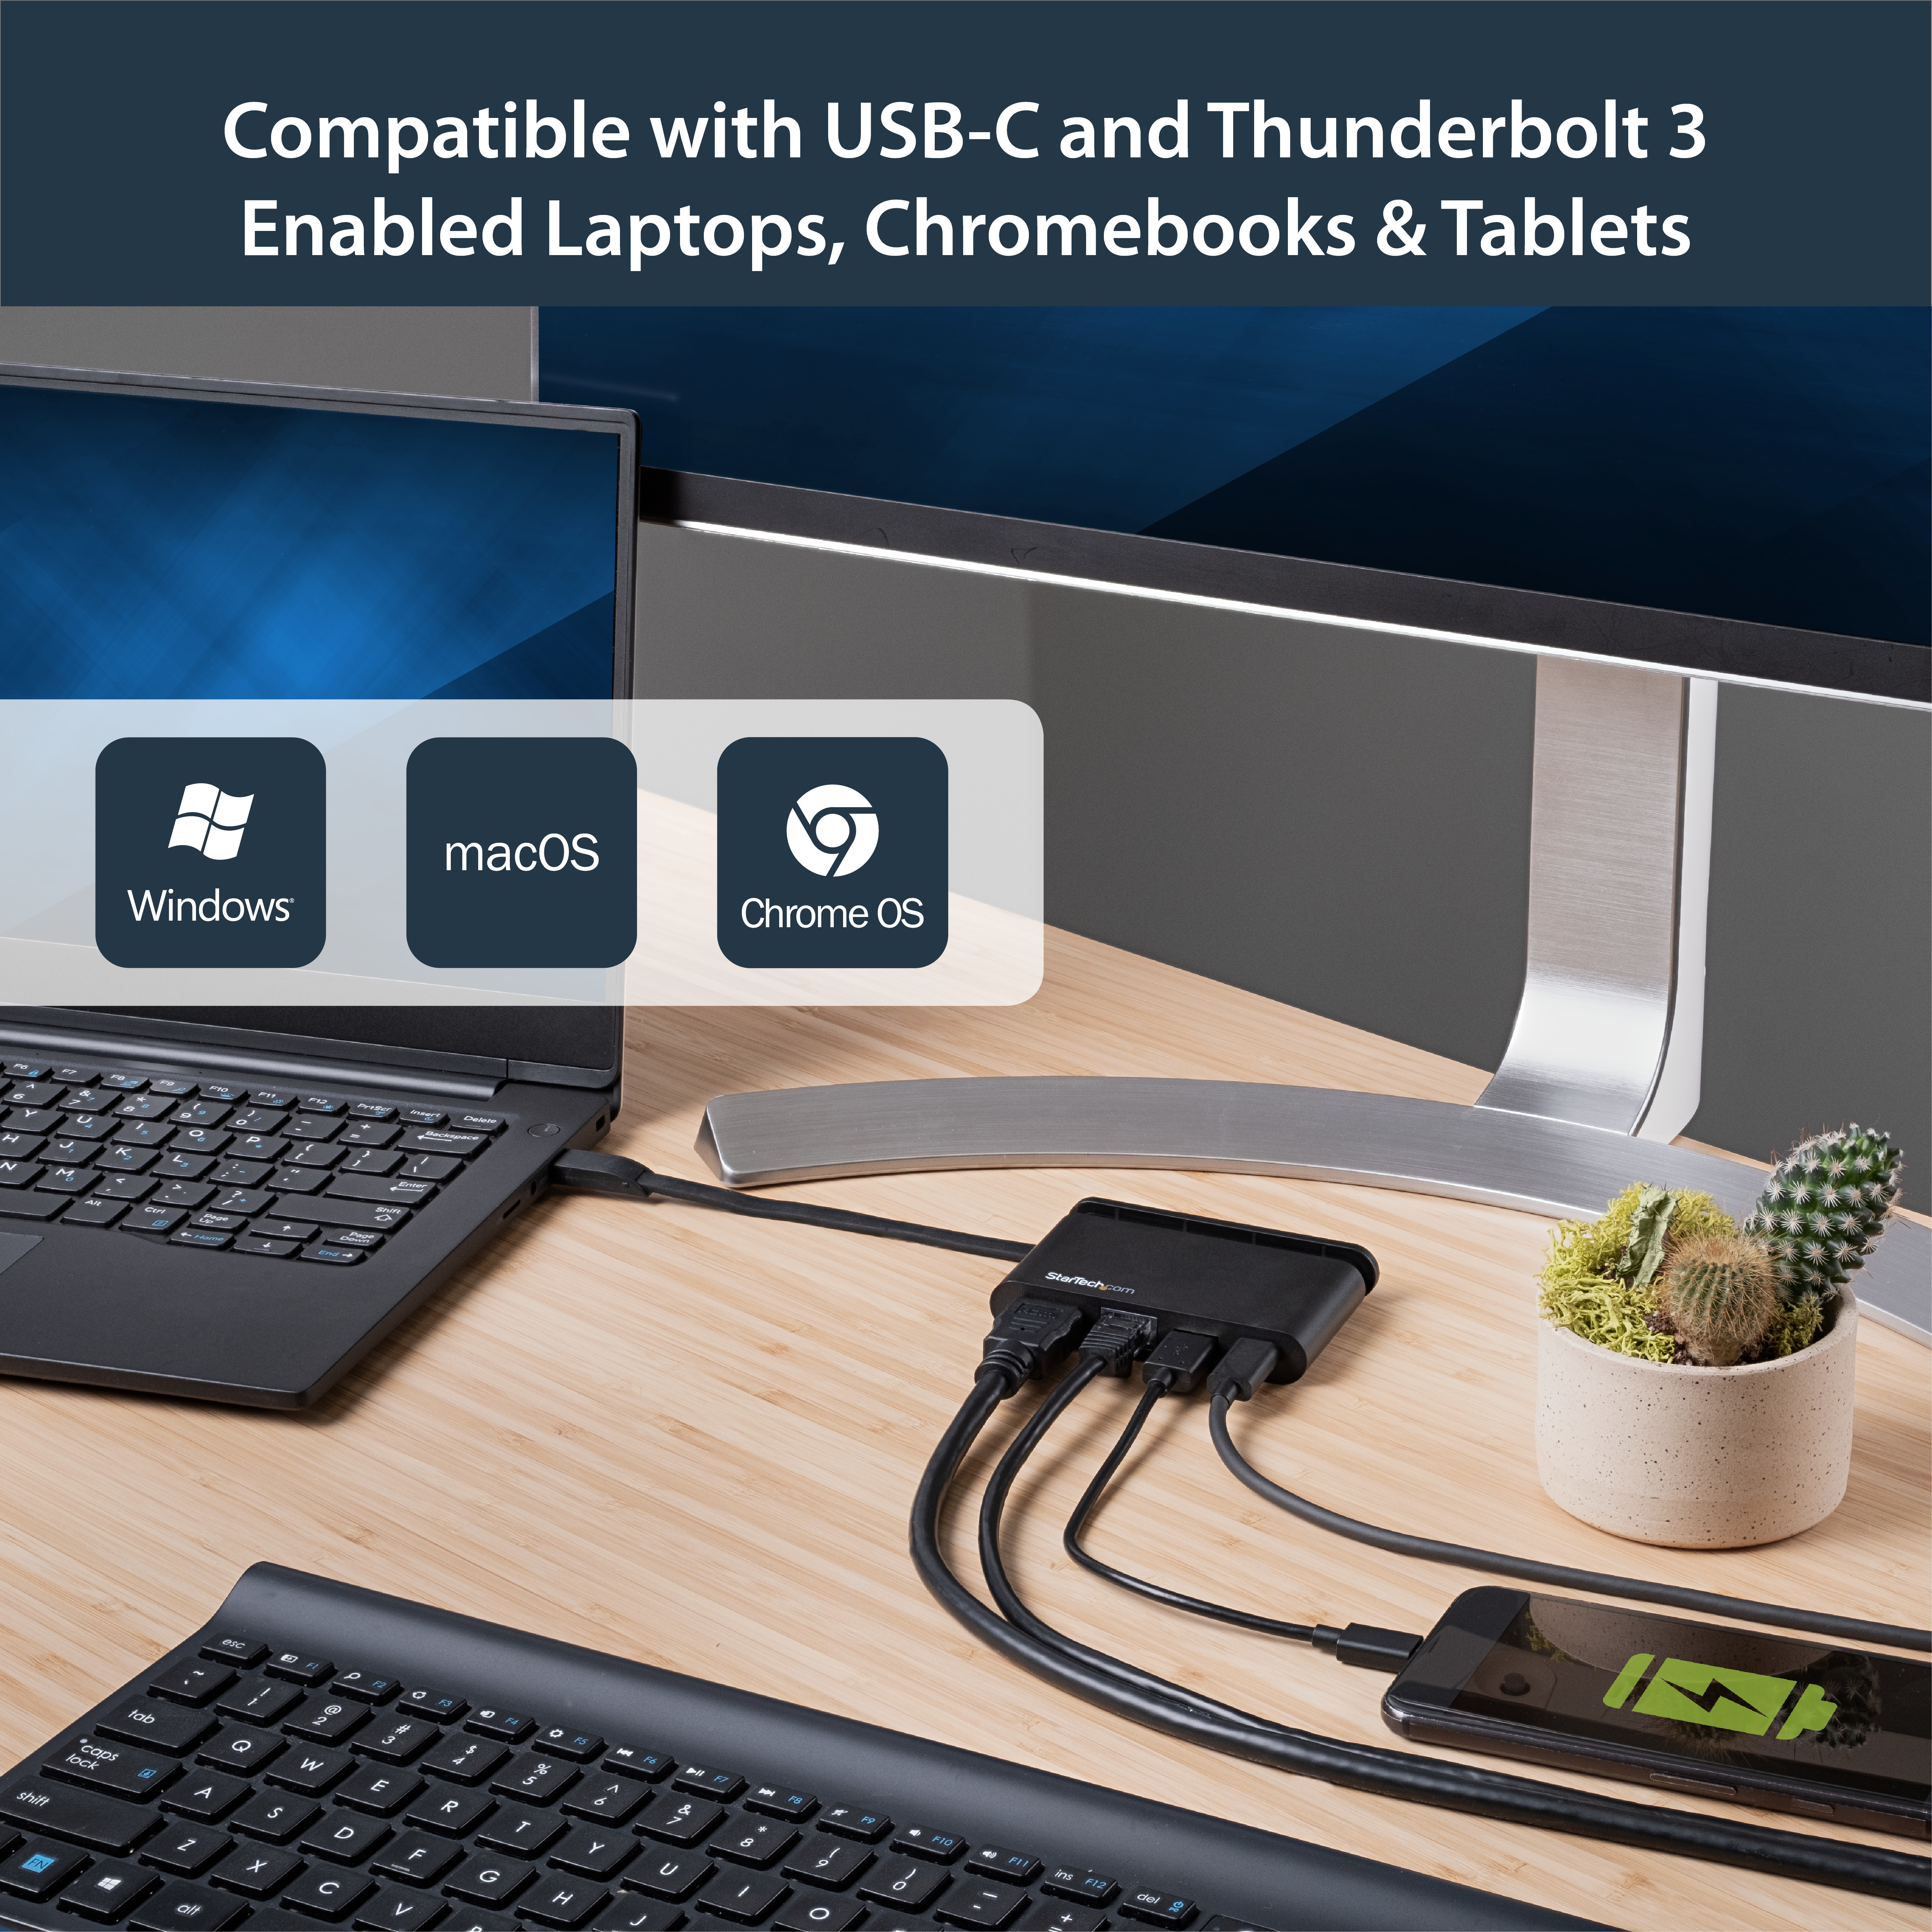 StarTech.com USB C Multiport Adapter mit HDMI